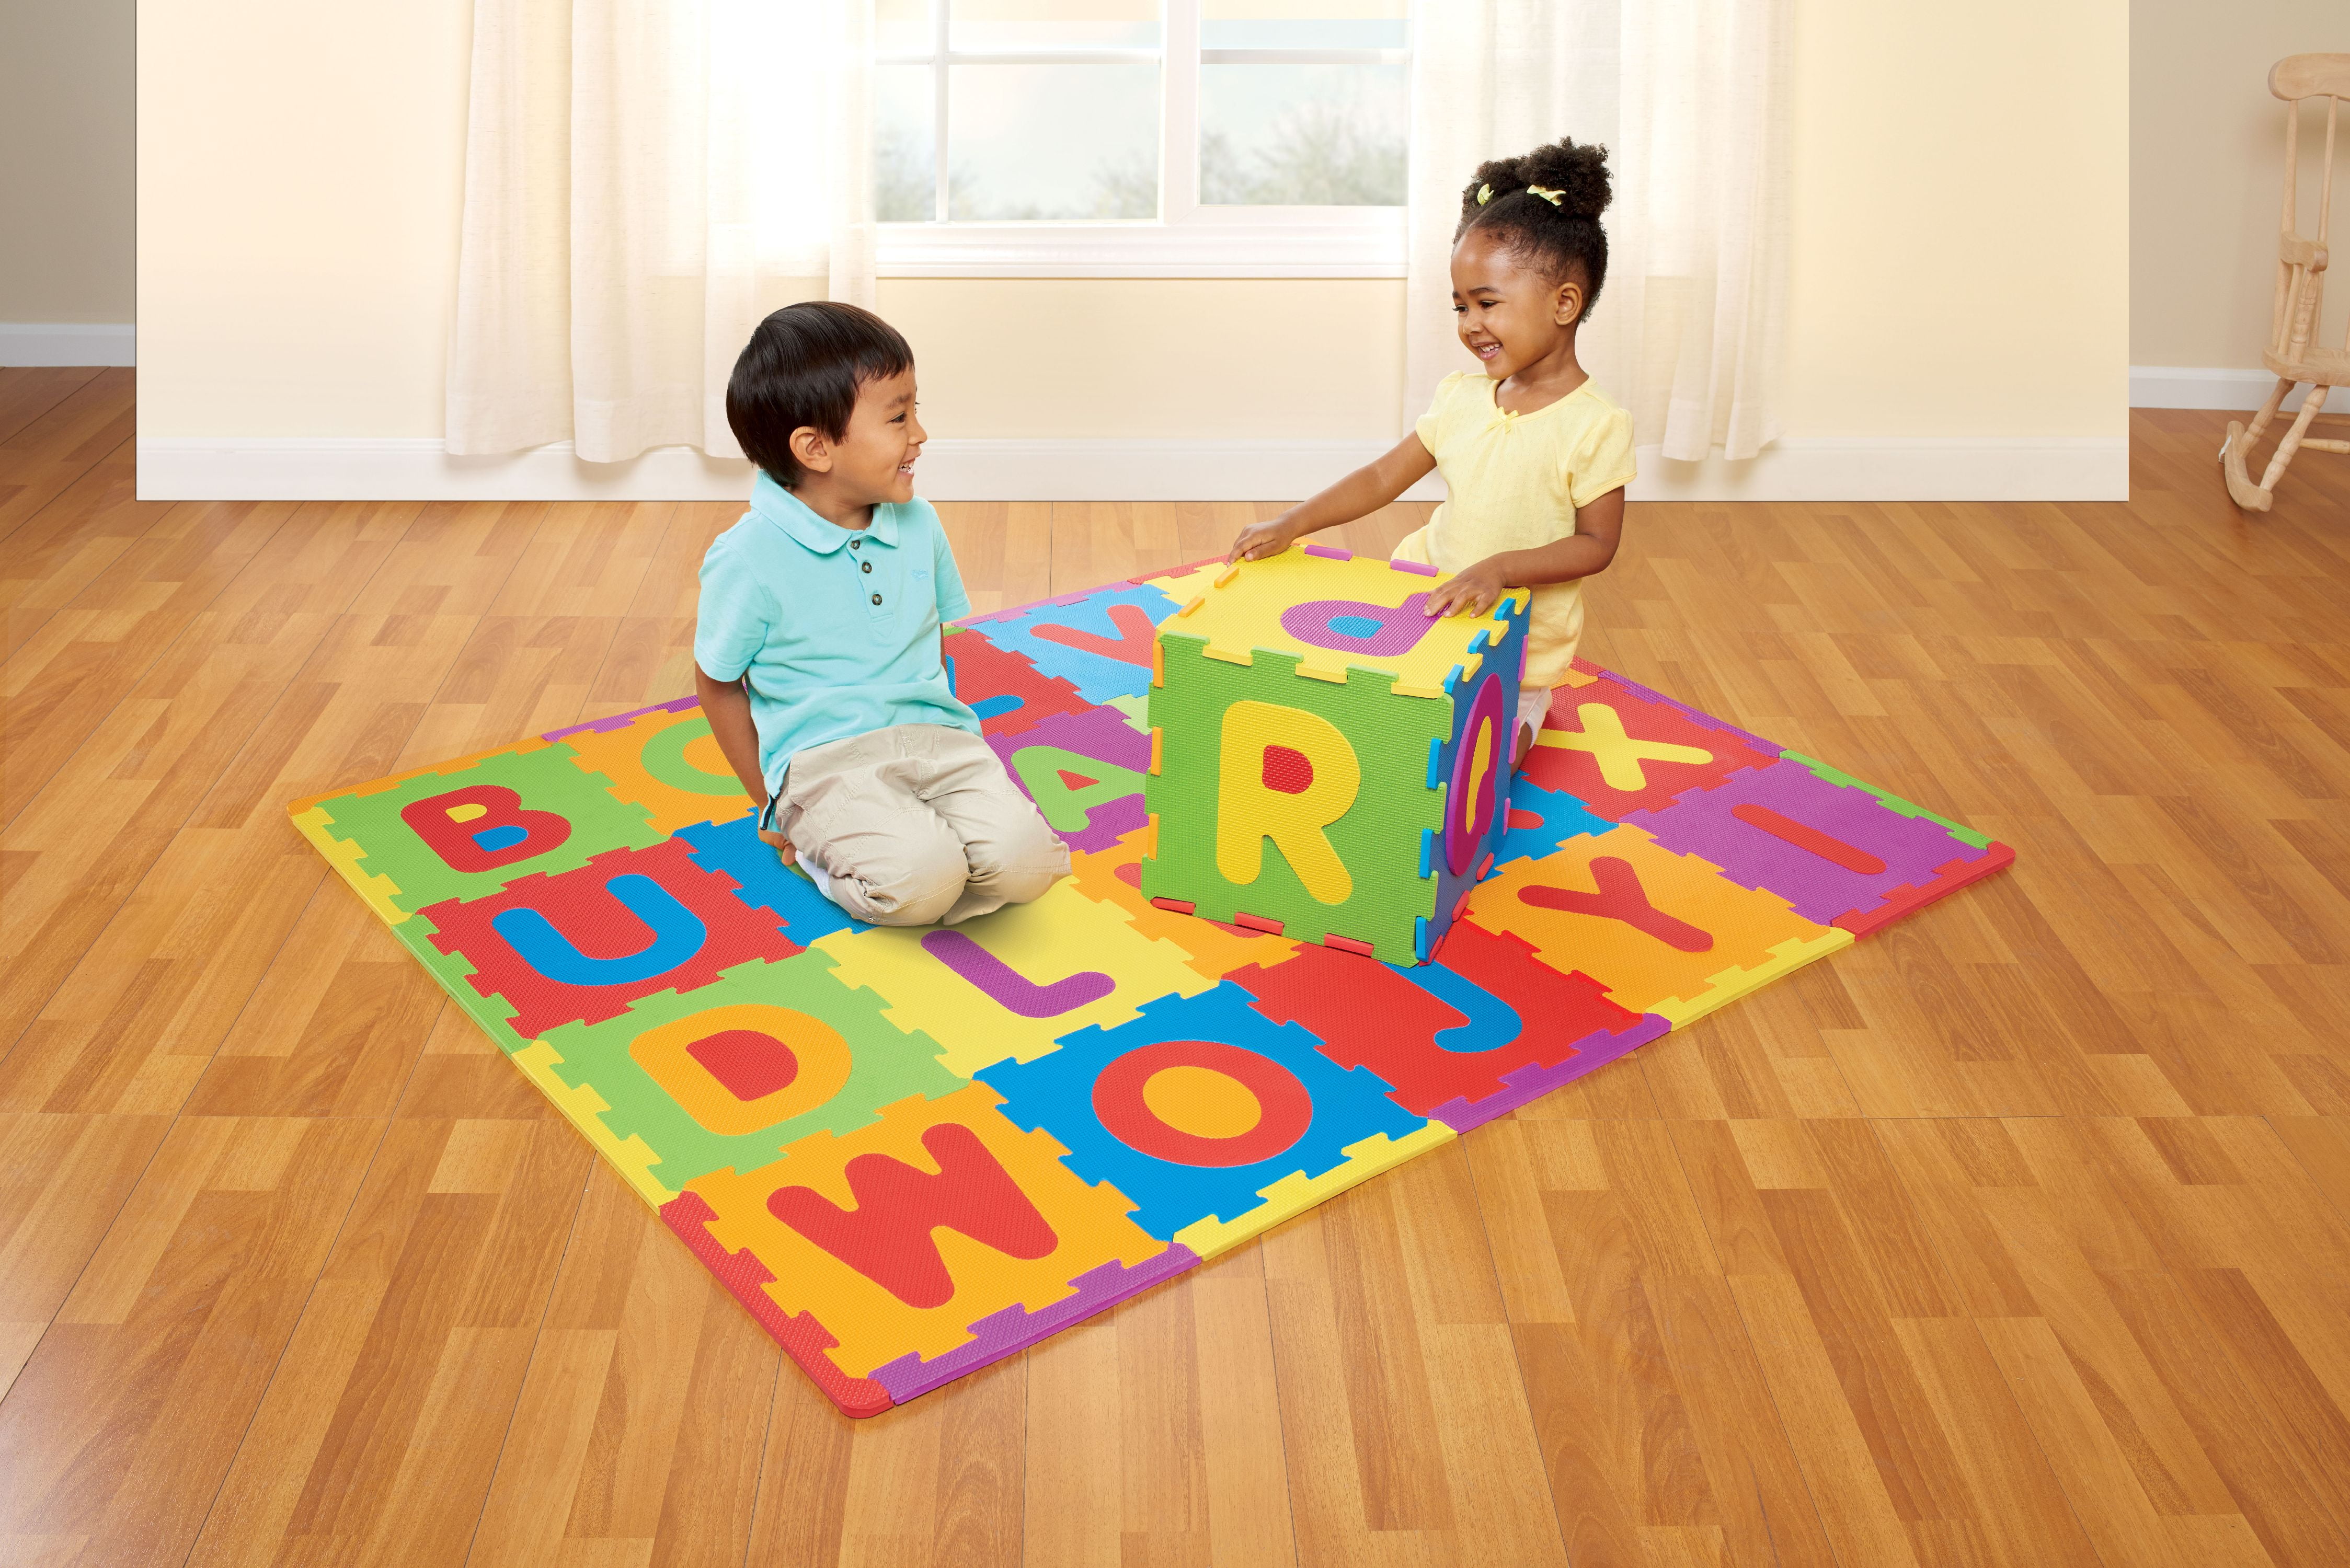 Viskeus Sluiting Plons Spark. Create. Imagine. ABC Foam Playmat Learning Toy Set, 28 Pieces -  Walmart.com